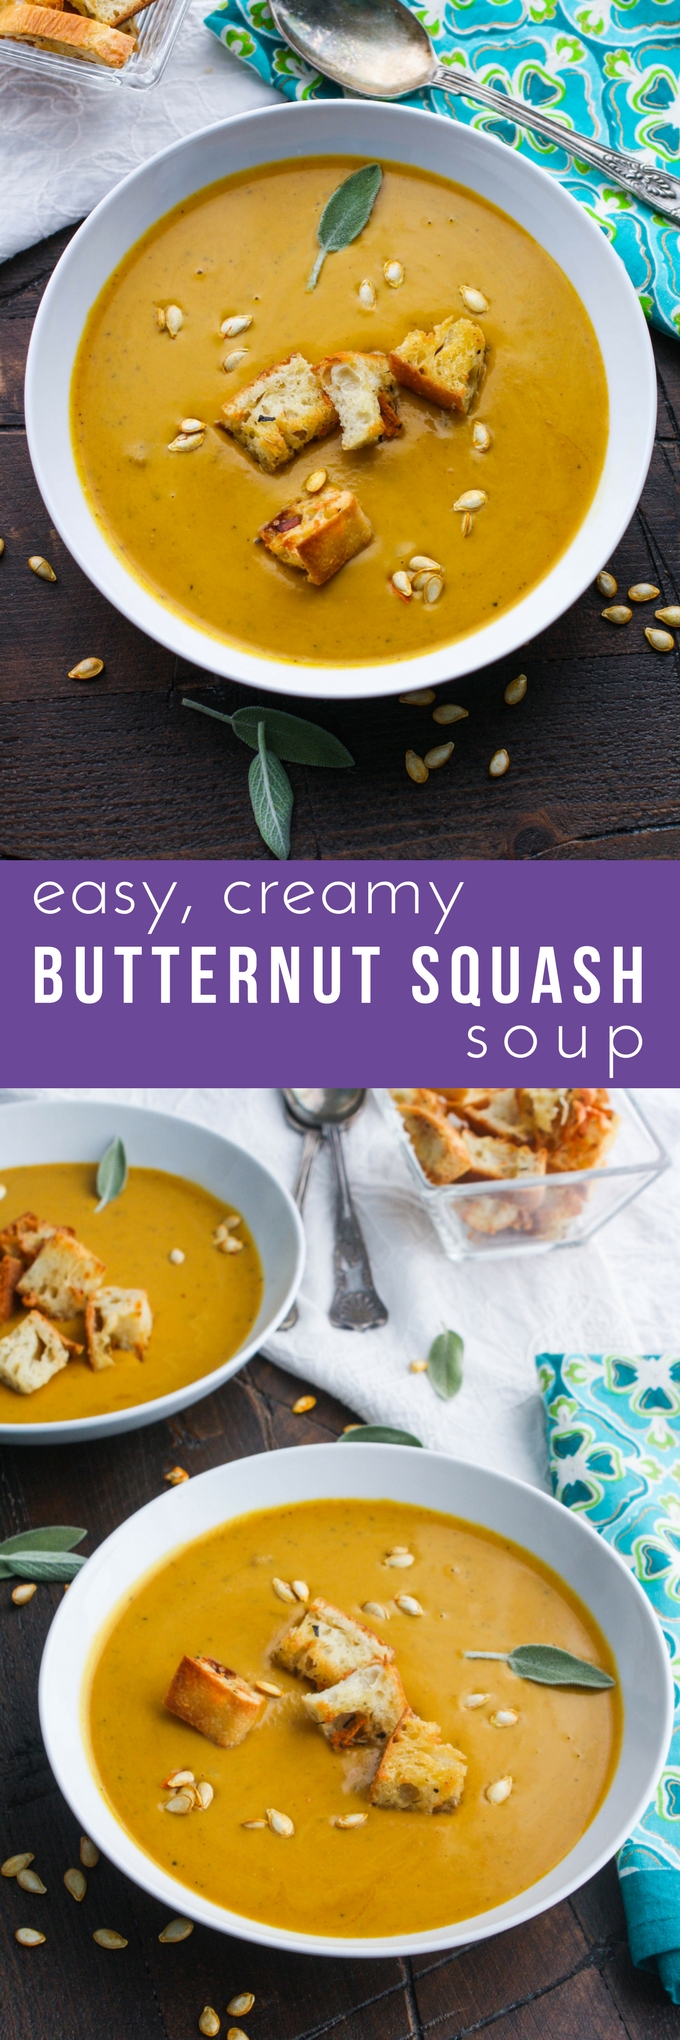 Easy, Creamy Butternut Squash Soup